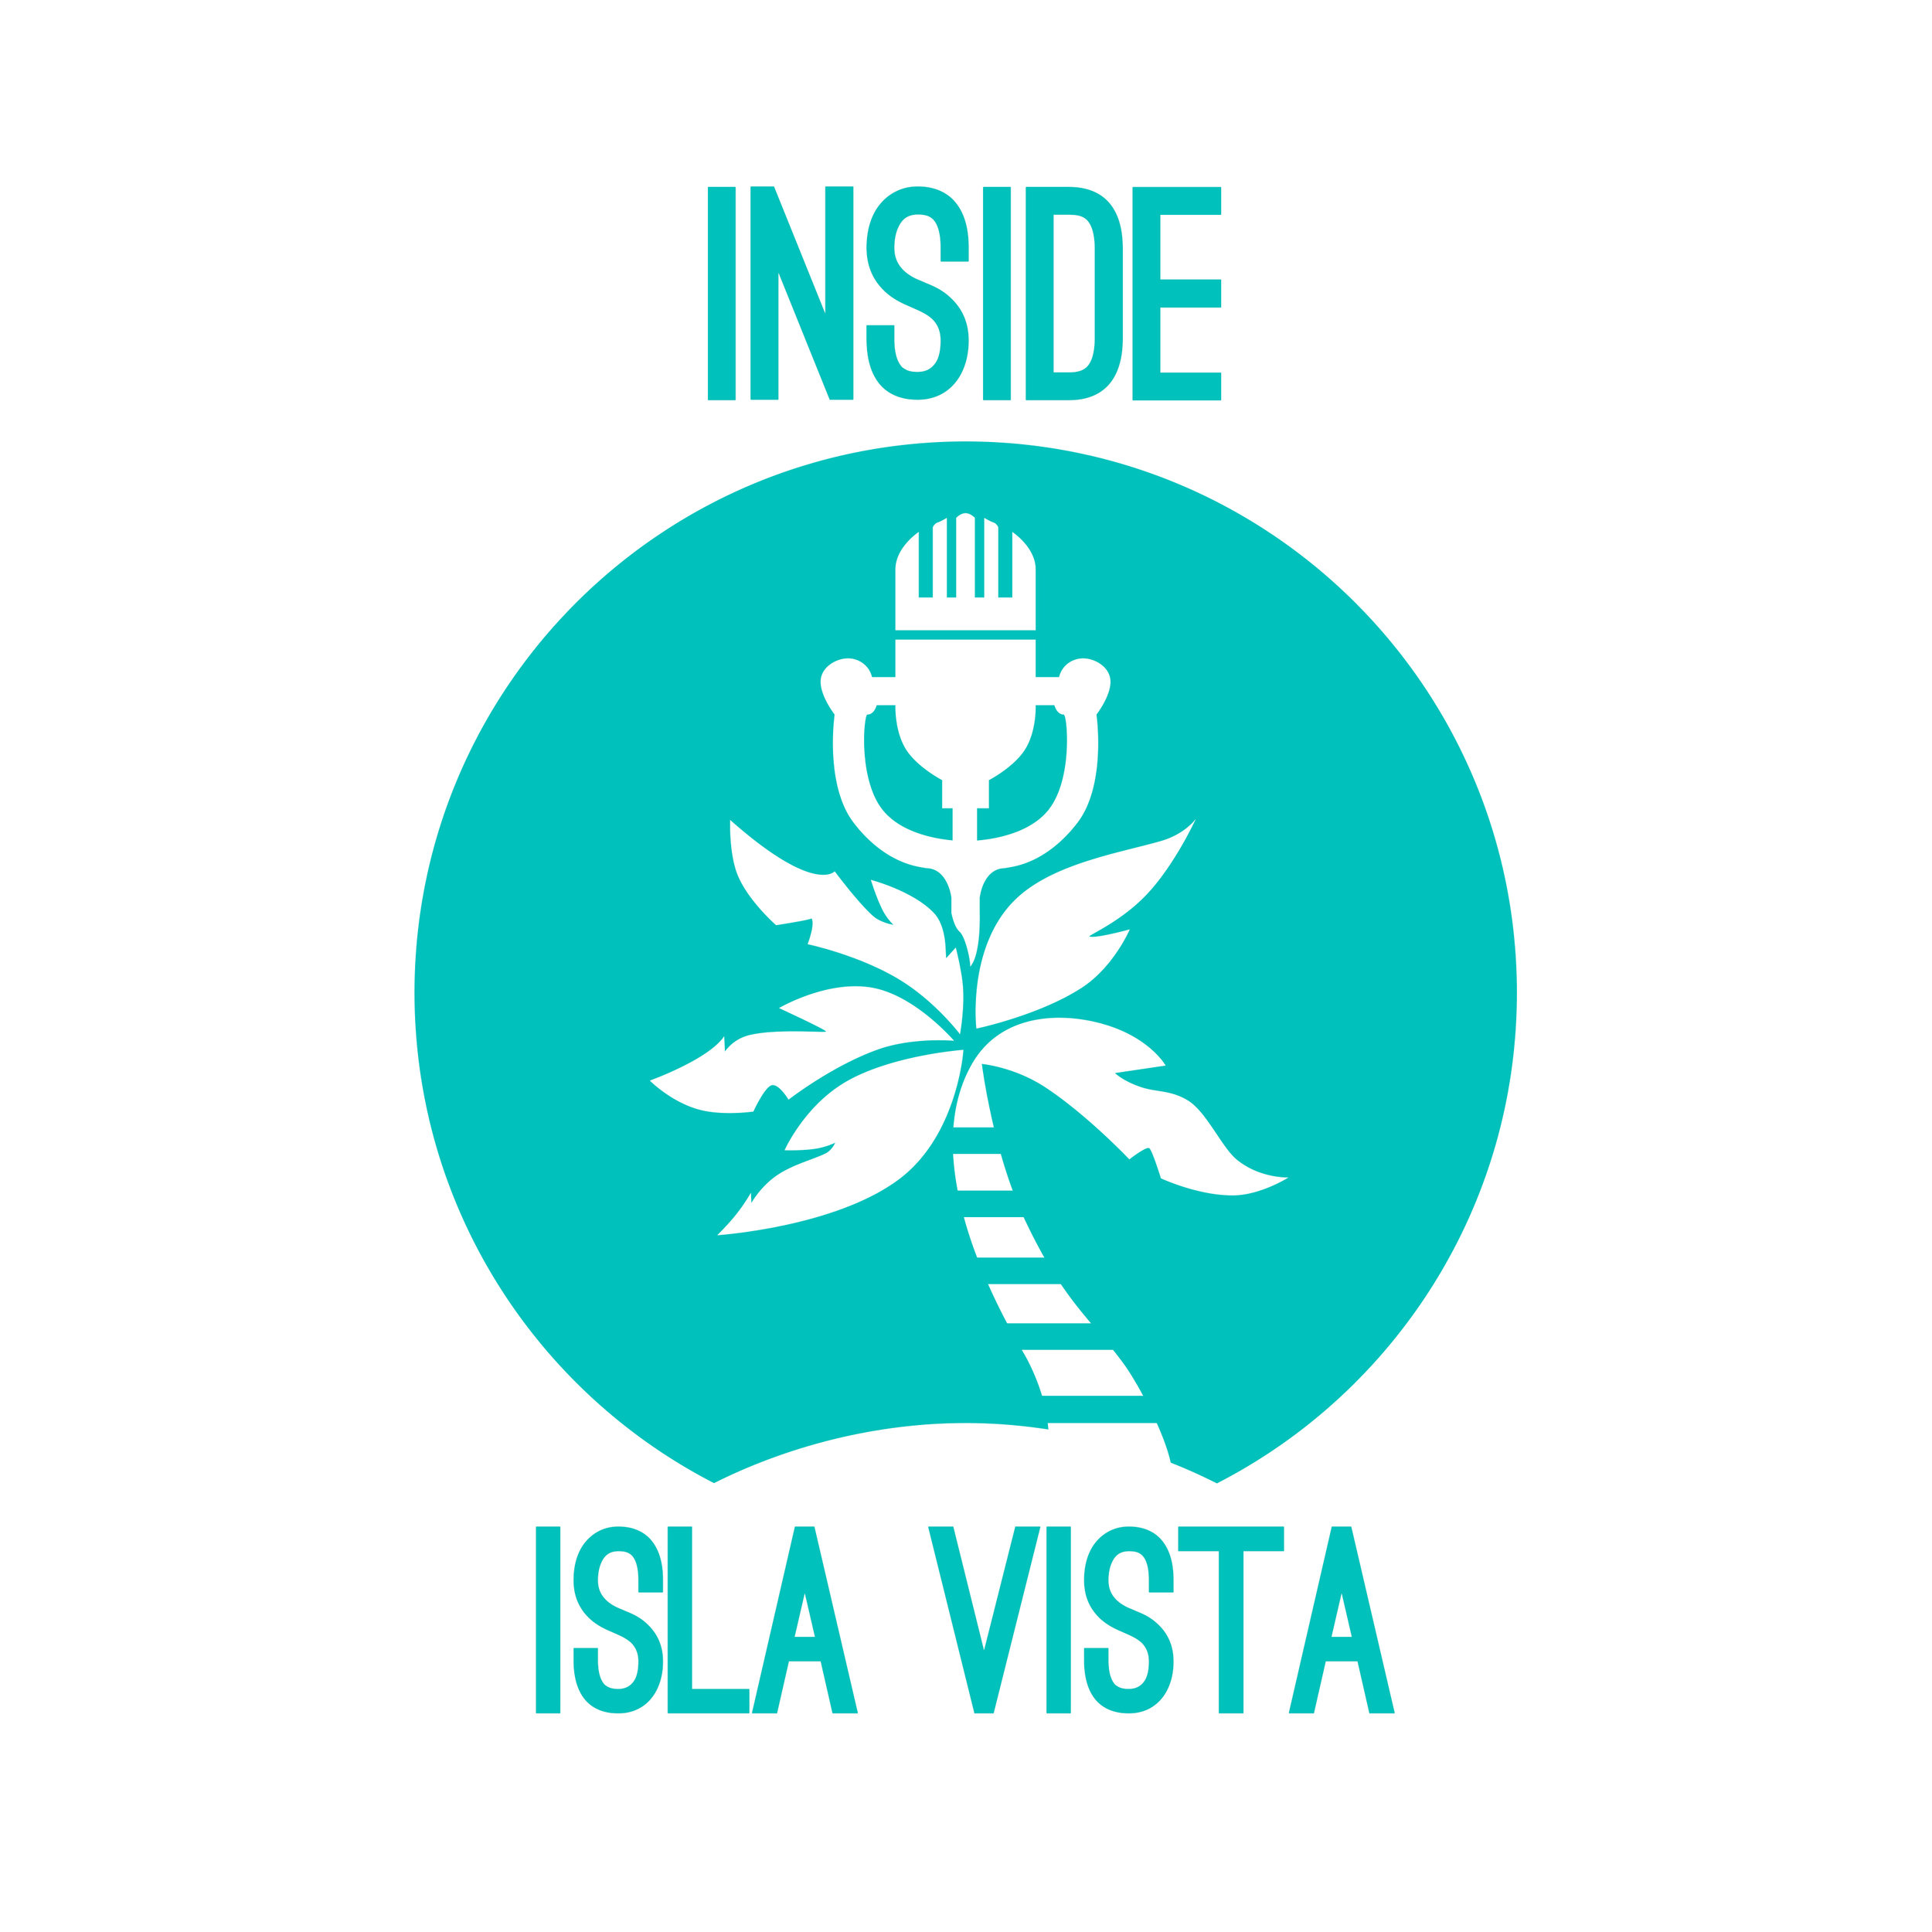 INSIDE ISLA VISTA